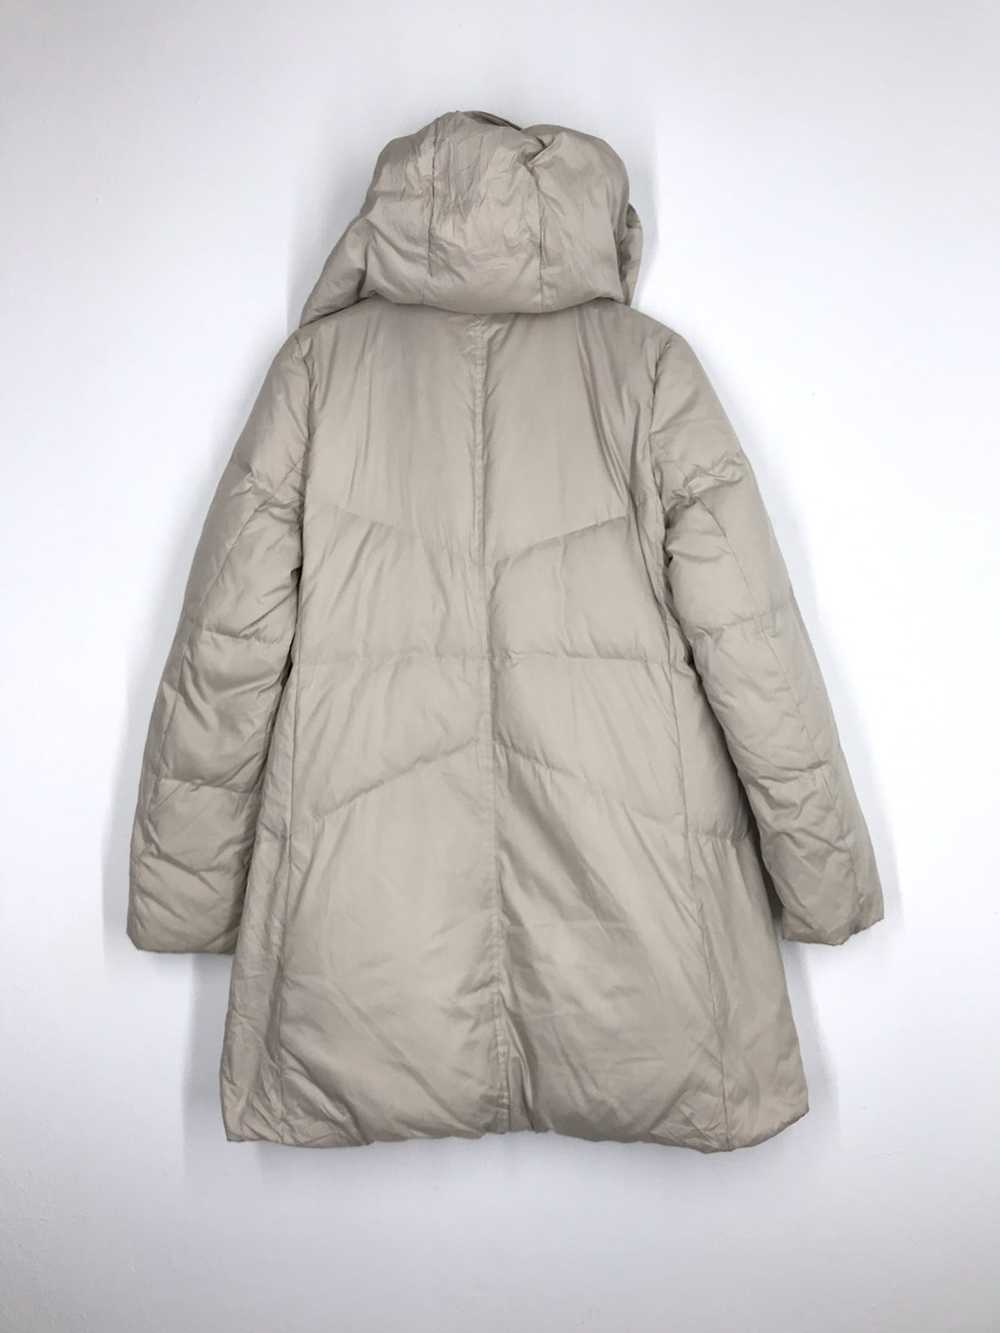 Japanese Brand Lautreamont Puffer Hoodie Jacket - image 5